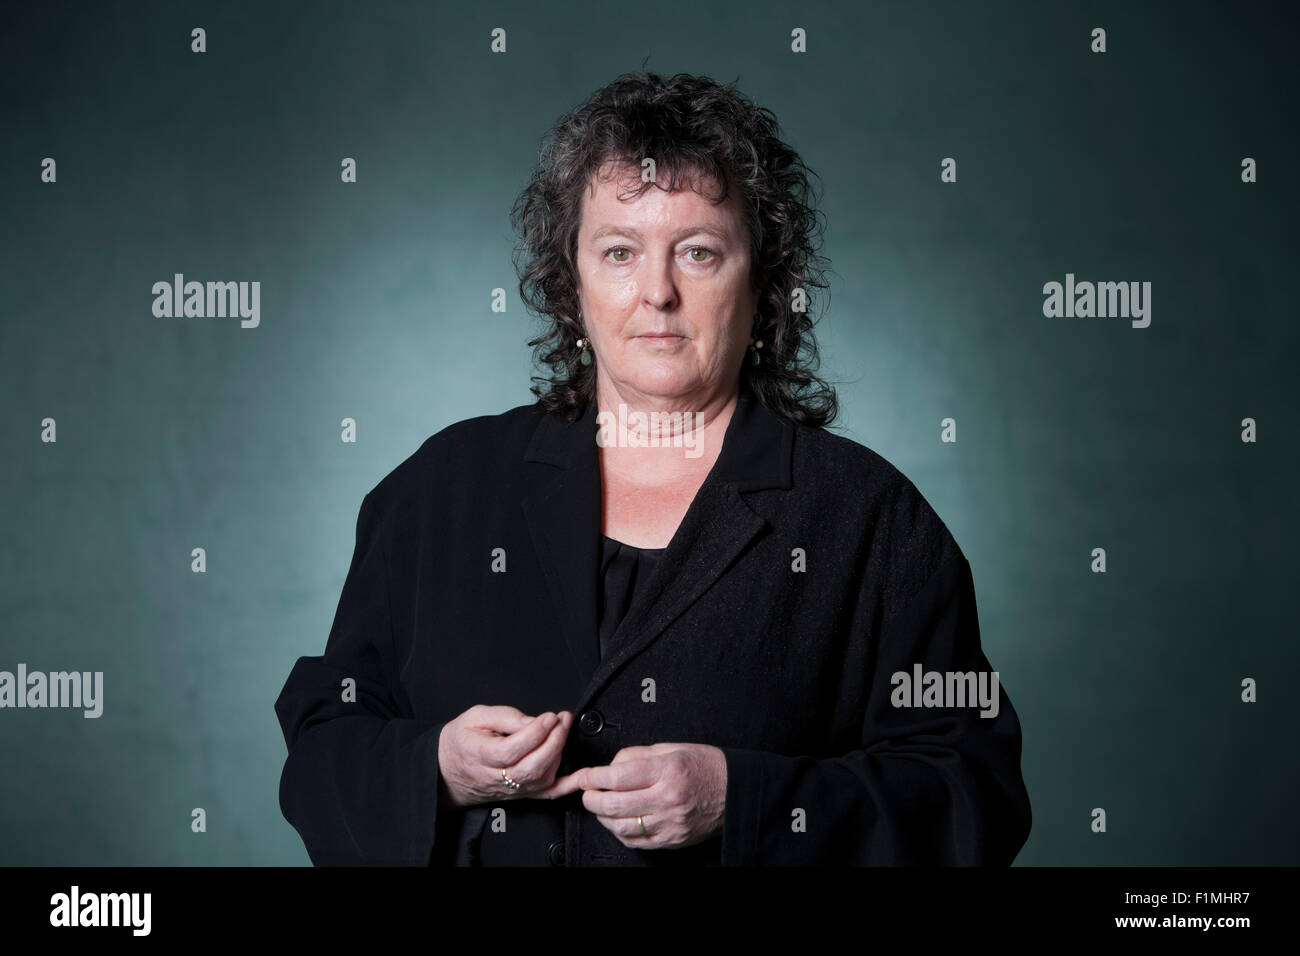 Carol Ann Duffy, Gran Bretagna il primo poeta femmina laureate, all'Edinburgh International Book Festival 2015. Edimburgo, Scozia. Foto Stock